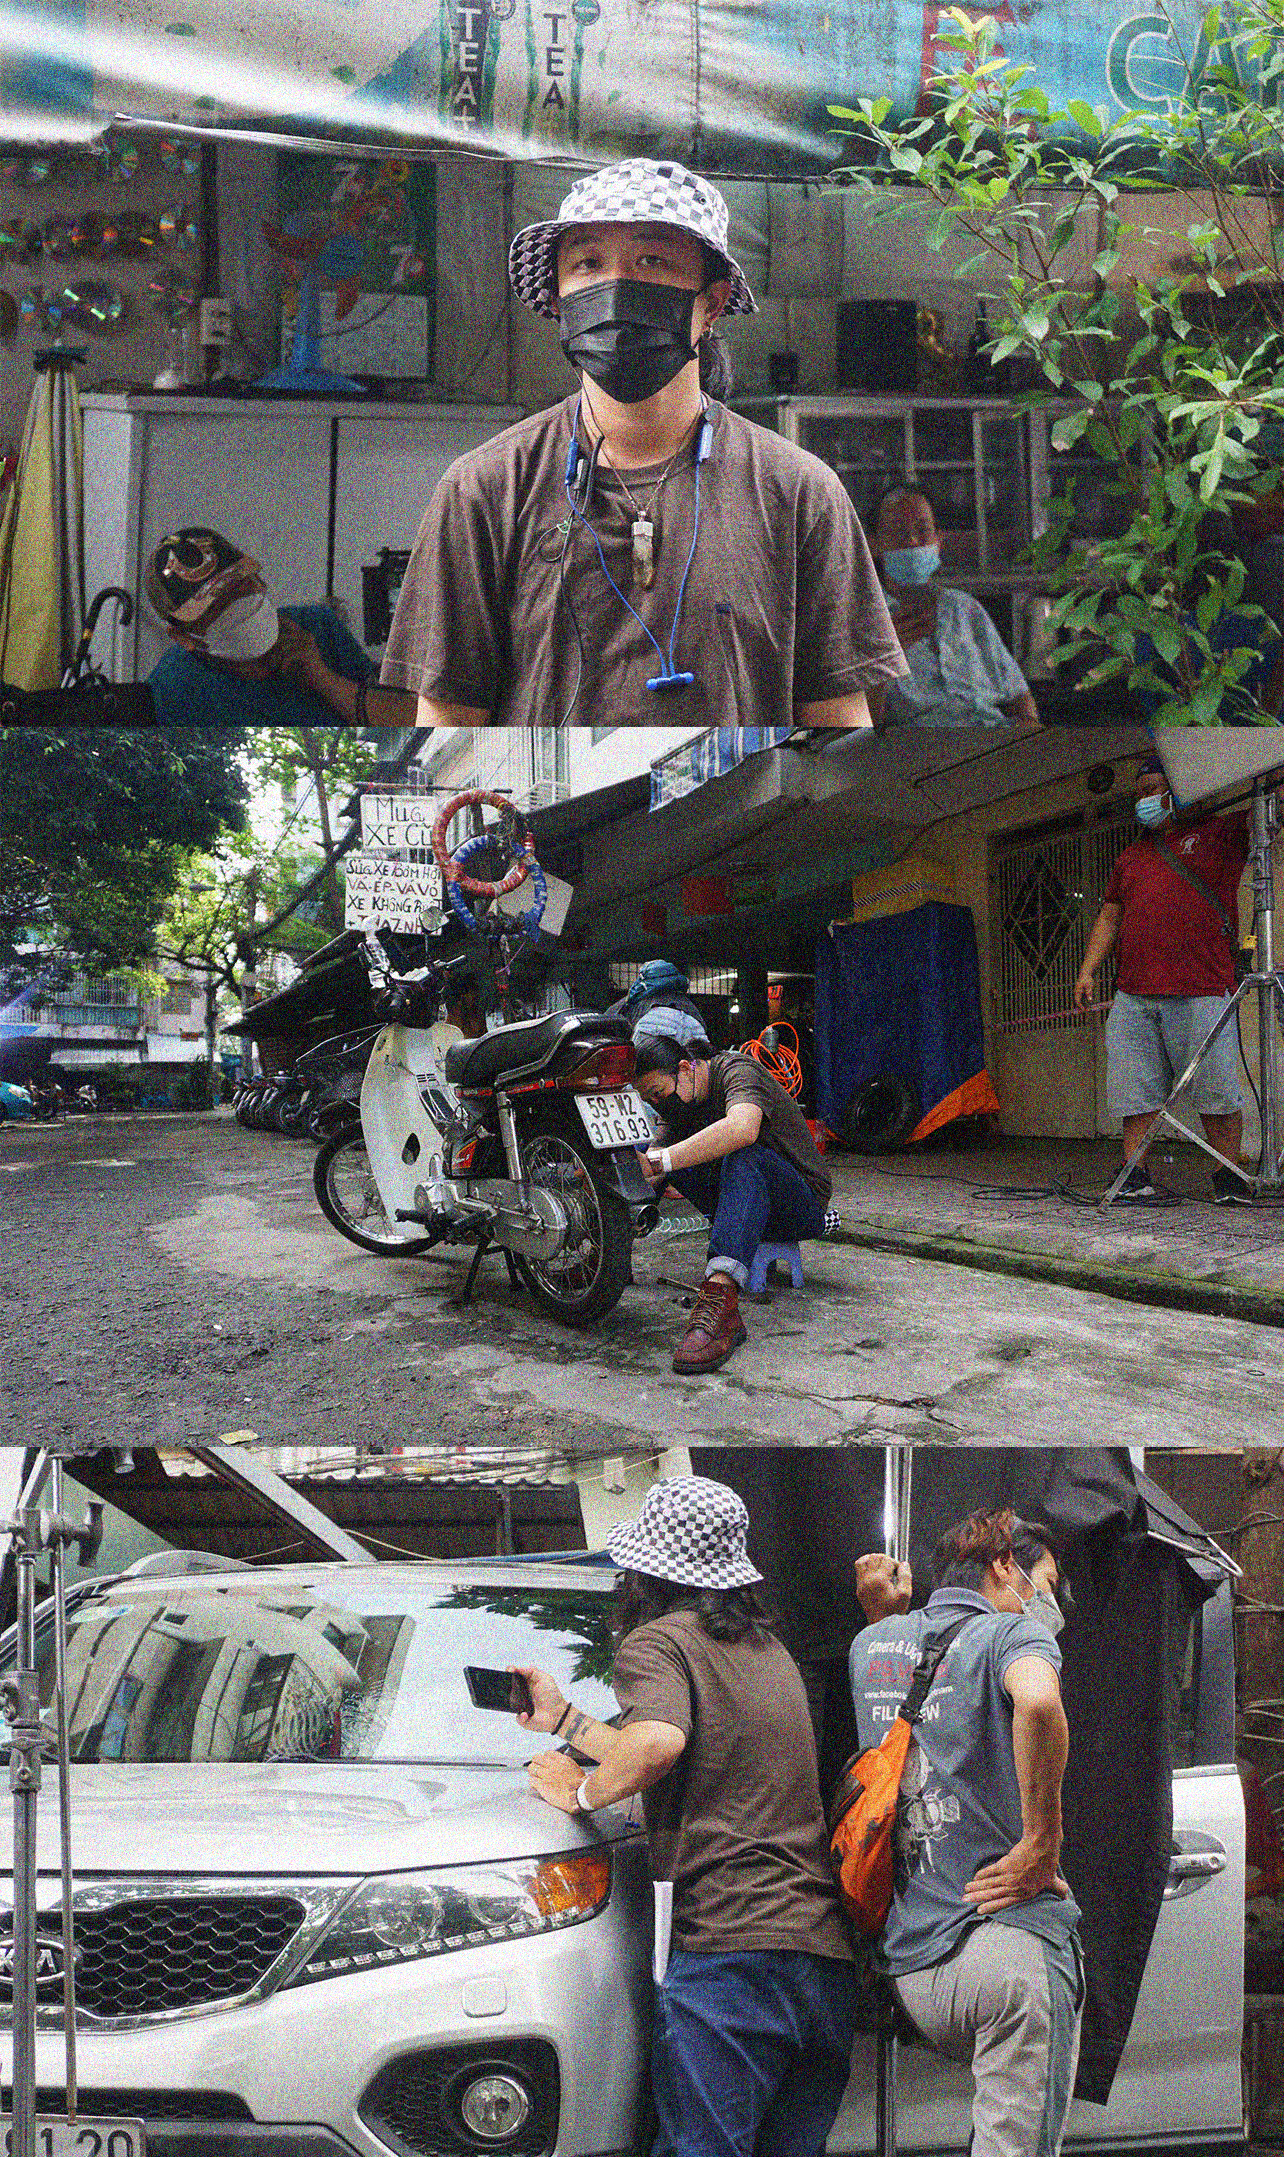  Tuan, fashionista turned bike mechanic, left-hand job as 1st AD 